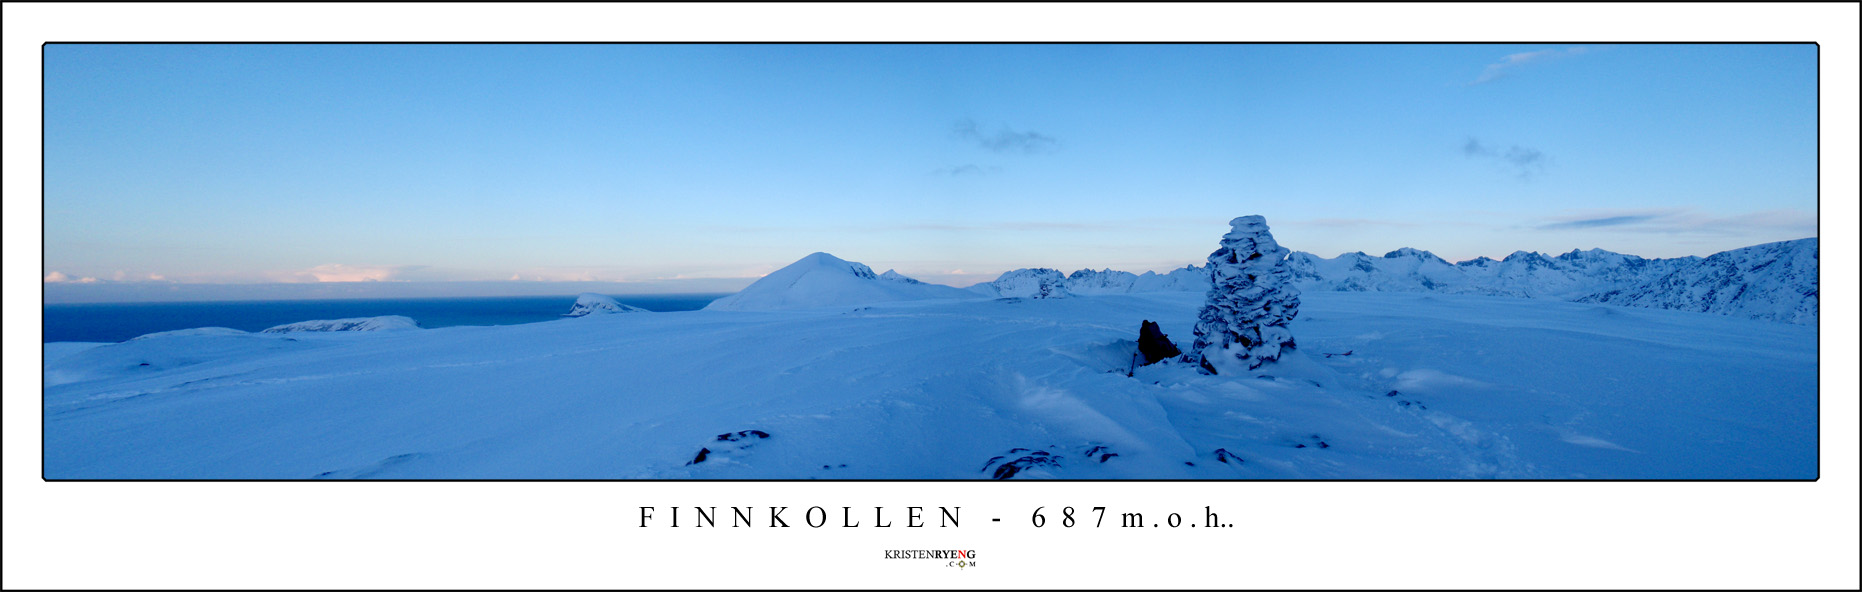 Panorama Finnkollen.jpg - Finnkollen 687 moh. (Kvaløya)